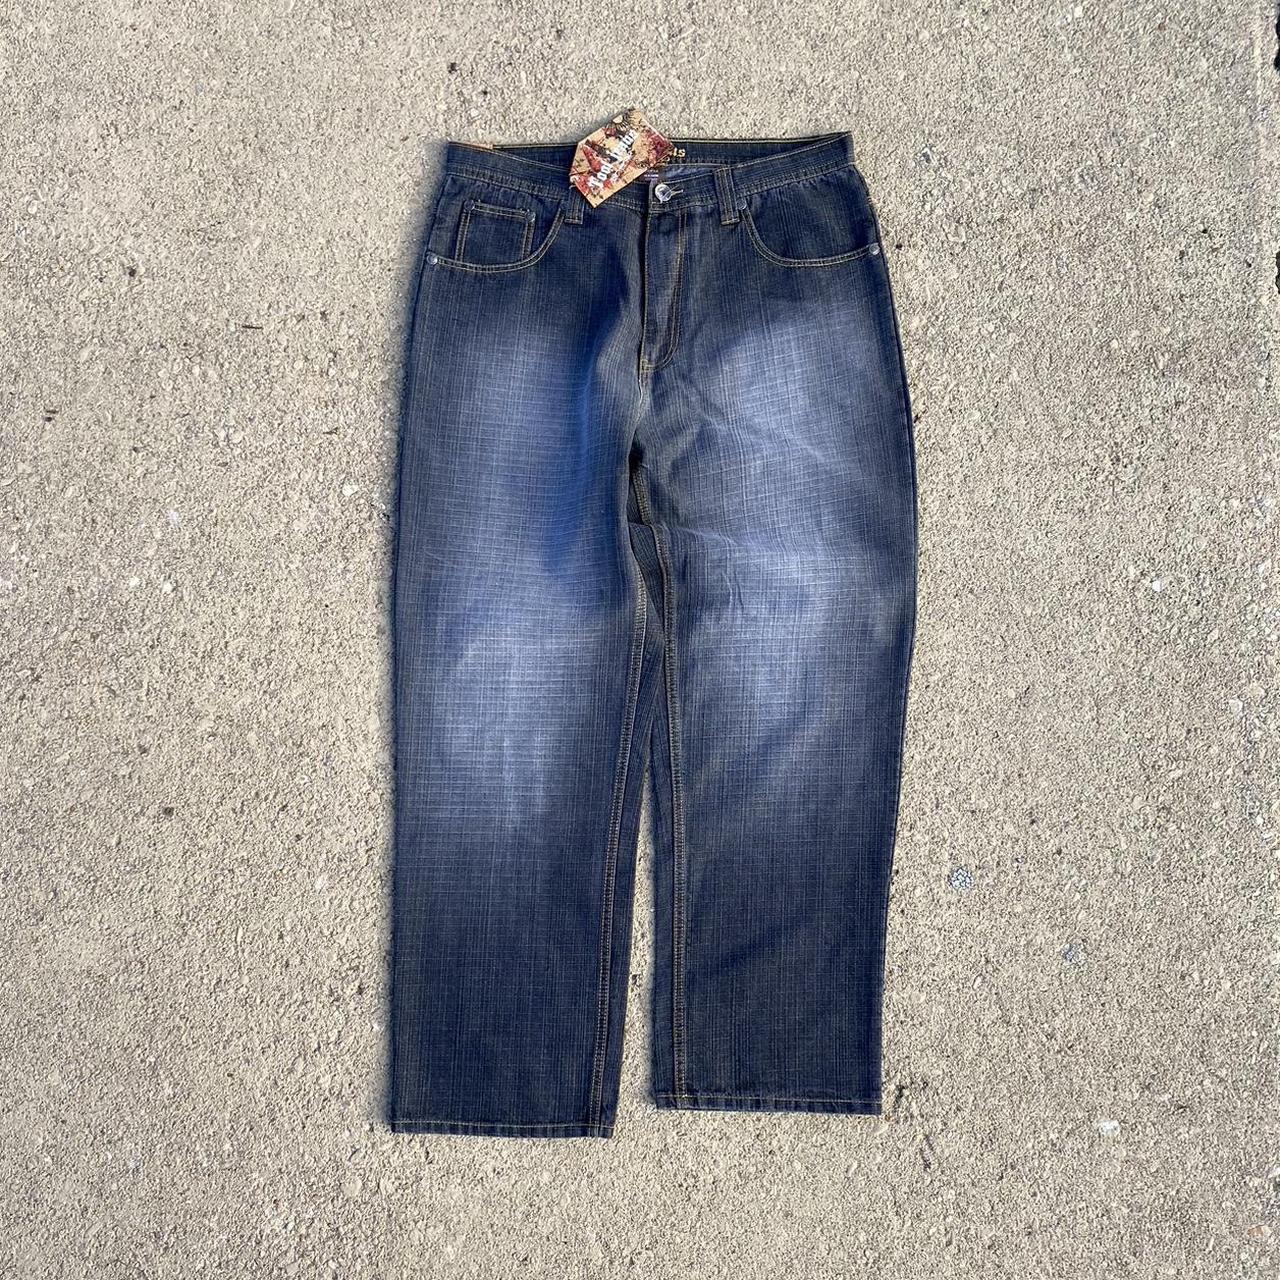 Bet Y2K Baggy Denim Tool Jeans Size 36 x 32 #jnco... - Depop